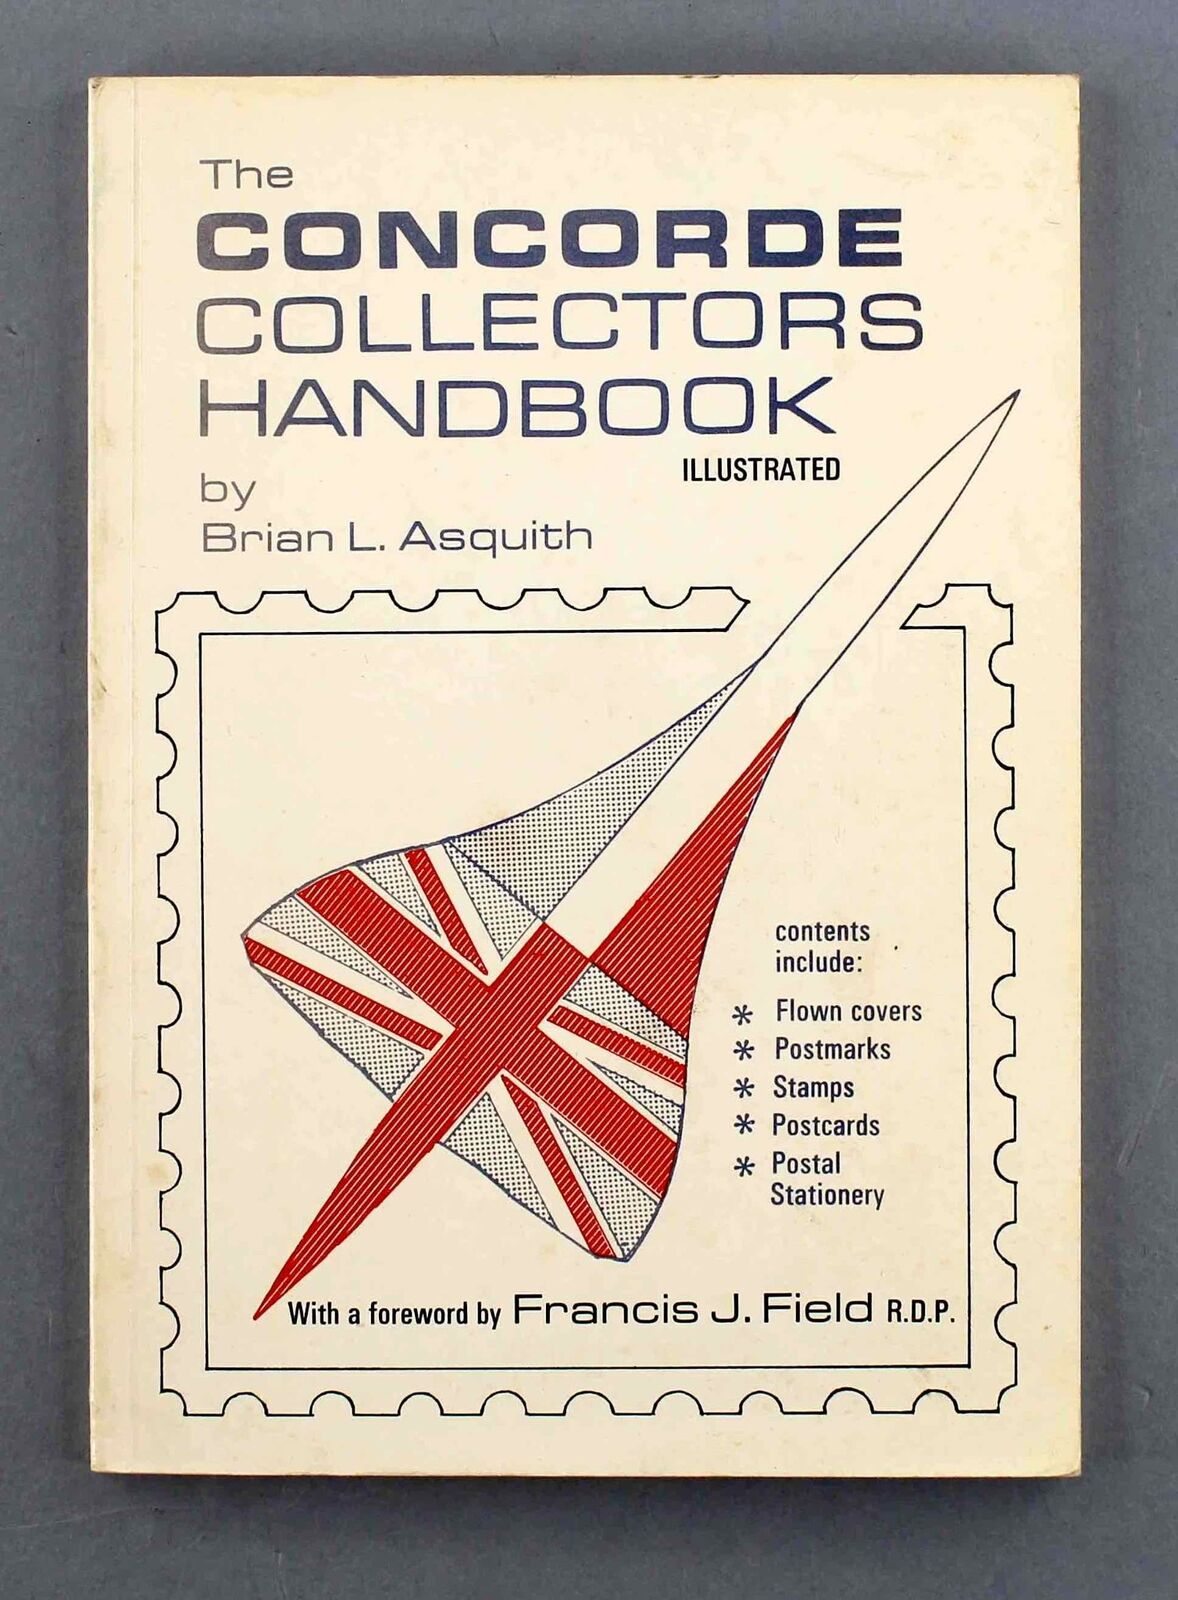 CONCORDE COLLECTORS HANDBOOK 1981 BRIAN L ASQUITH RARE CONCORDE BOOK COVERS